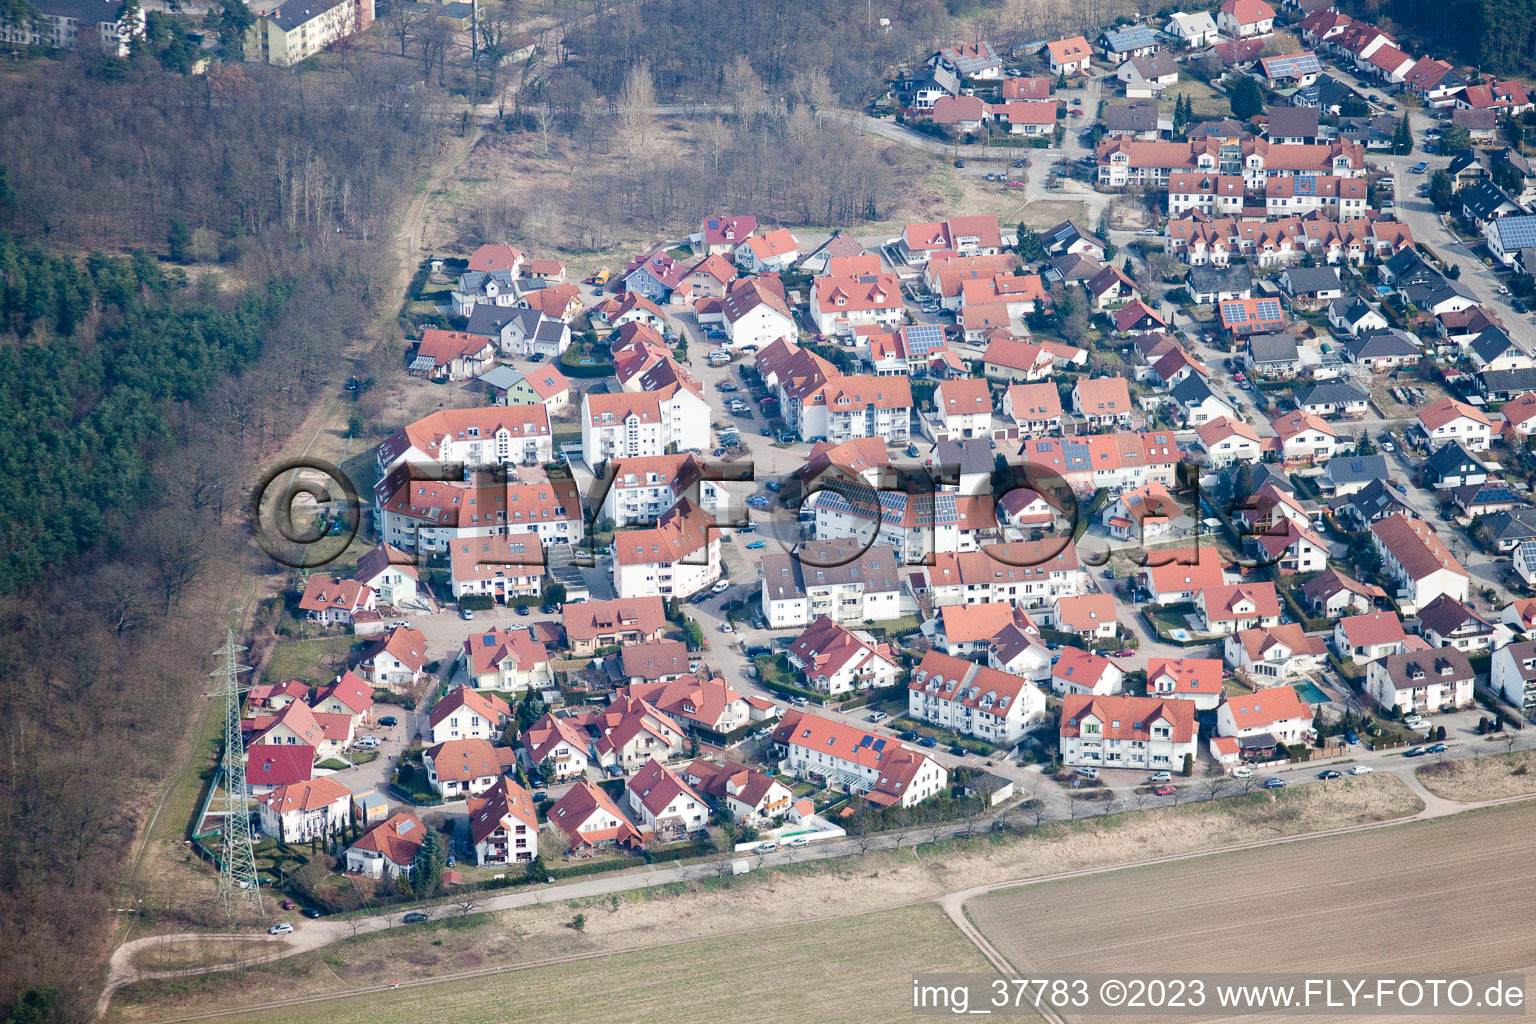 Quartier Sondernheim in Germersheim dans le département Rhénanie-Palatinat, Allemagne vu d'un drone